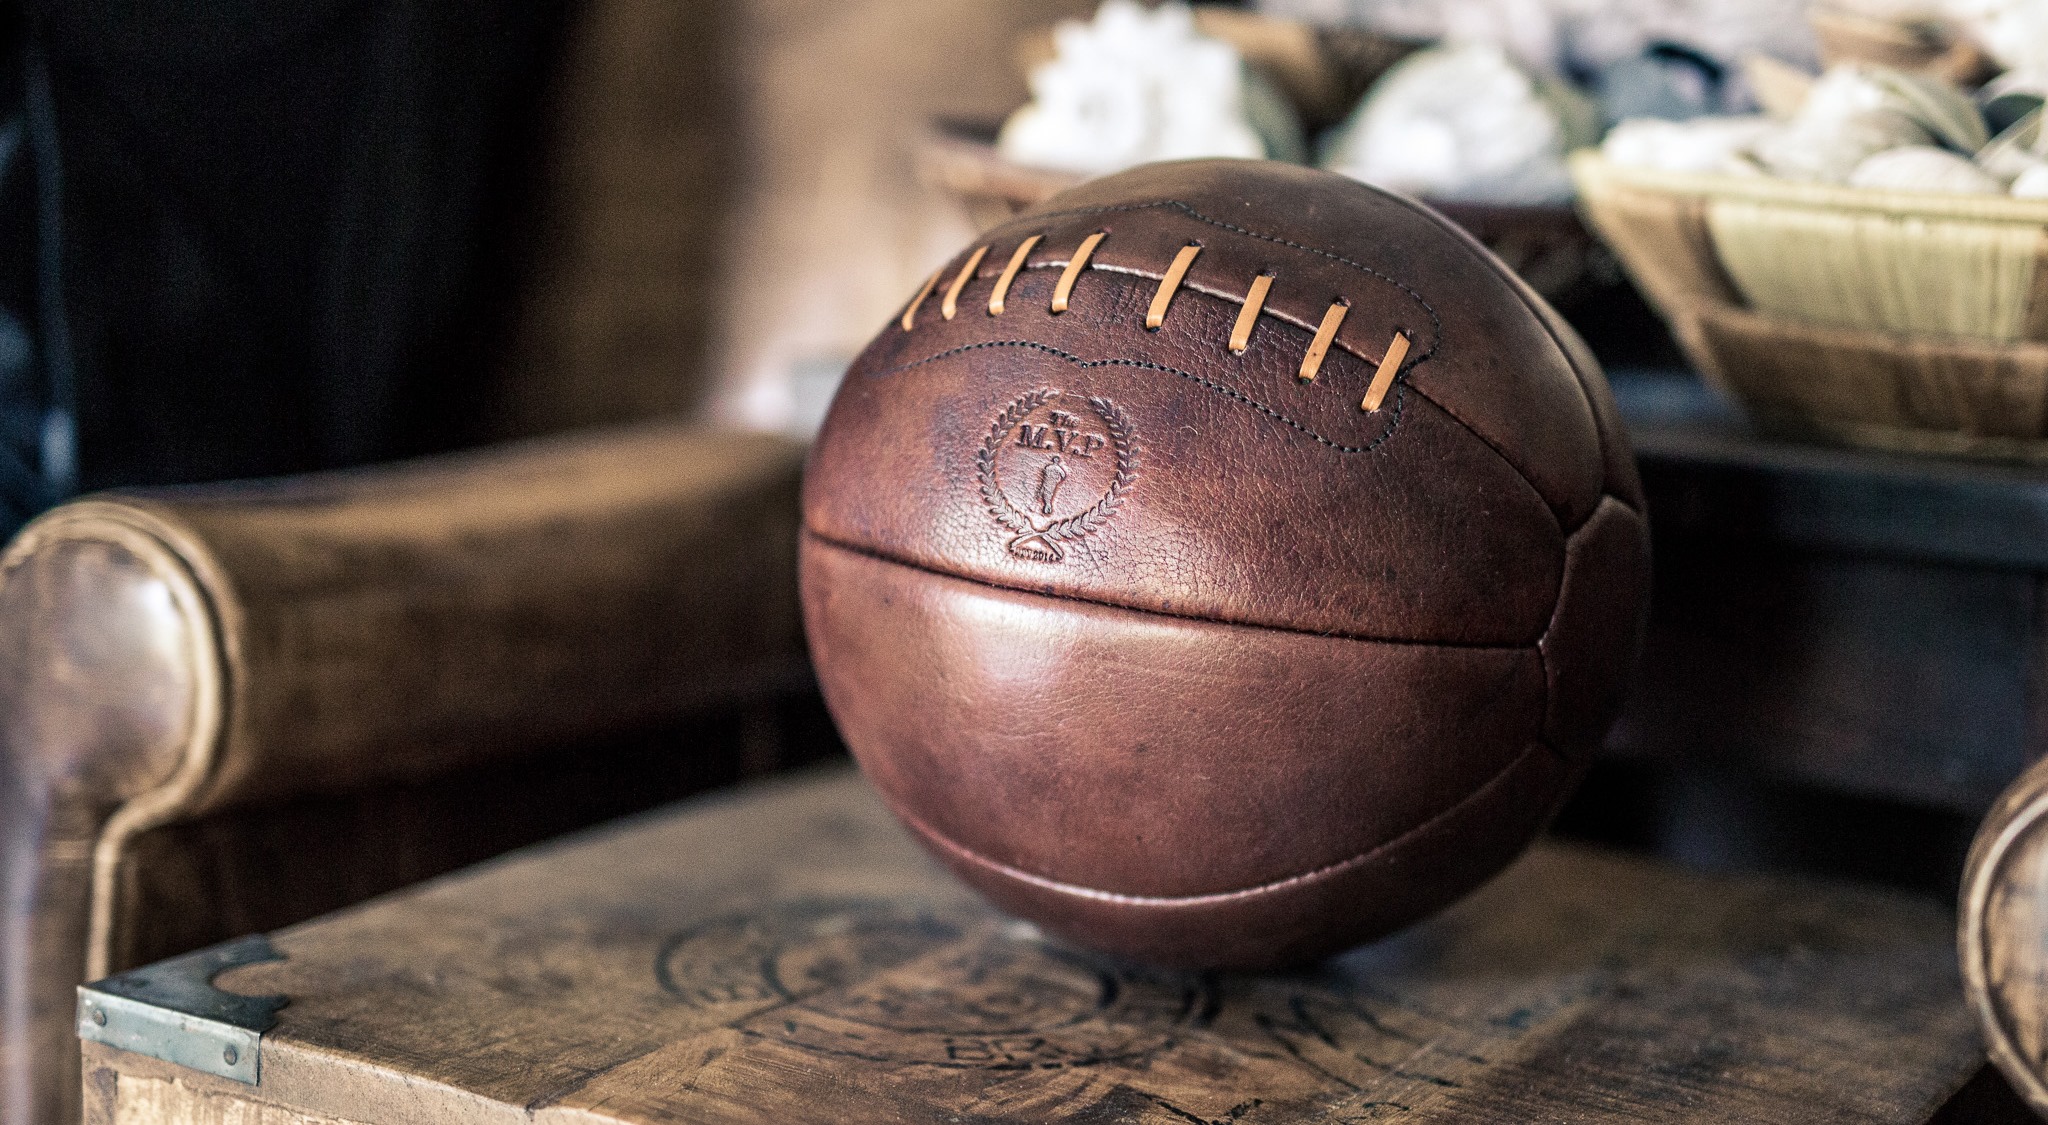 vintage soccer ball